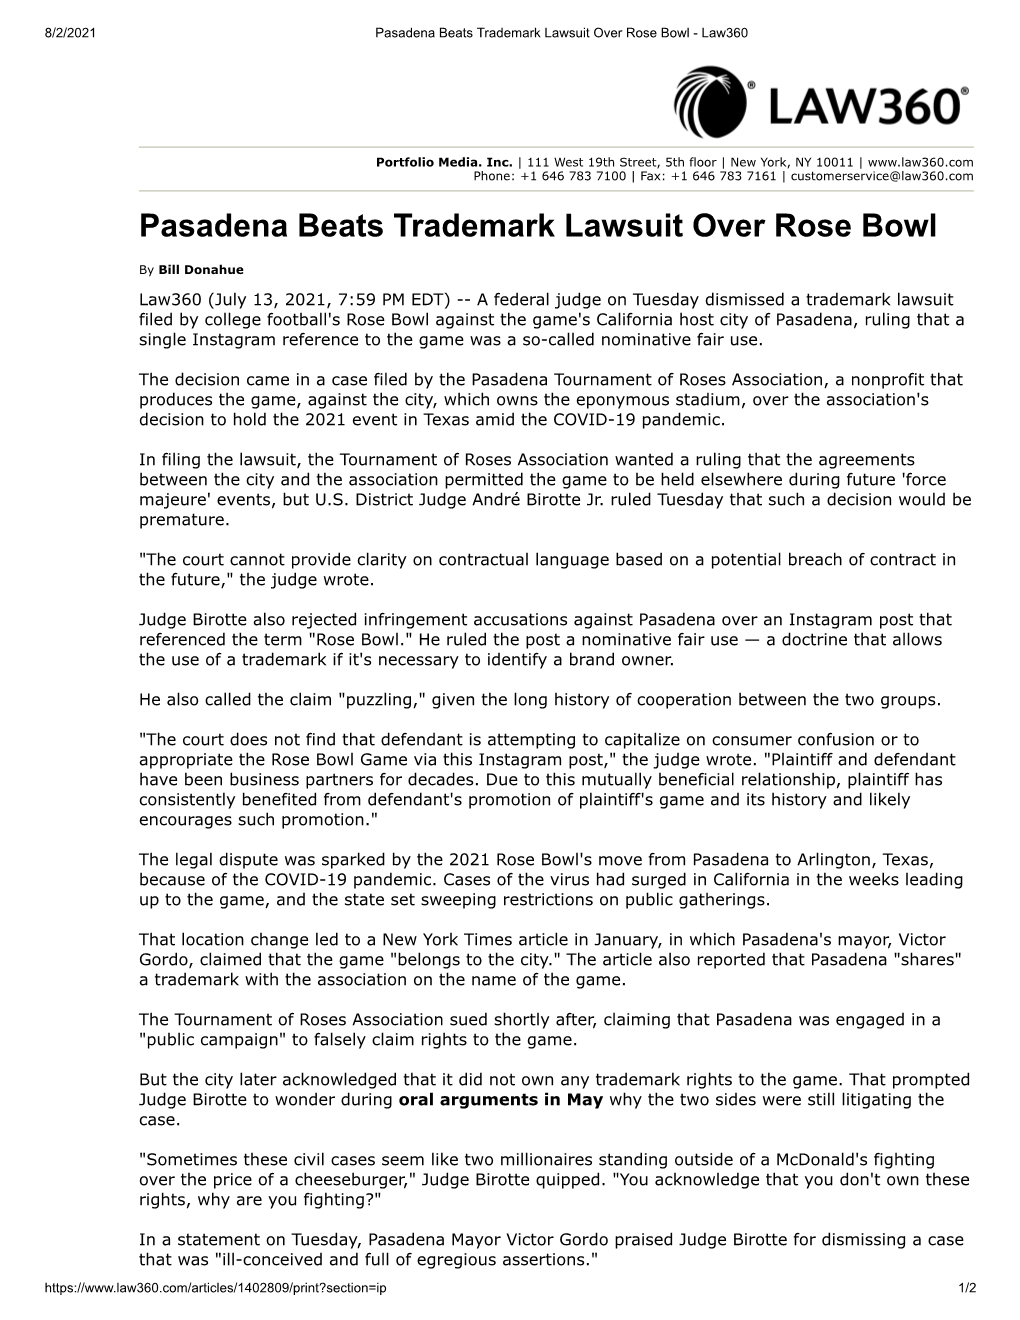 Pasadena Beats Trademark Lawsuit Over Rose Bowl - Law360